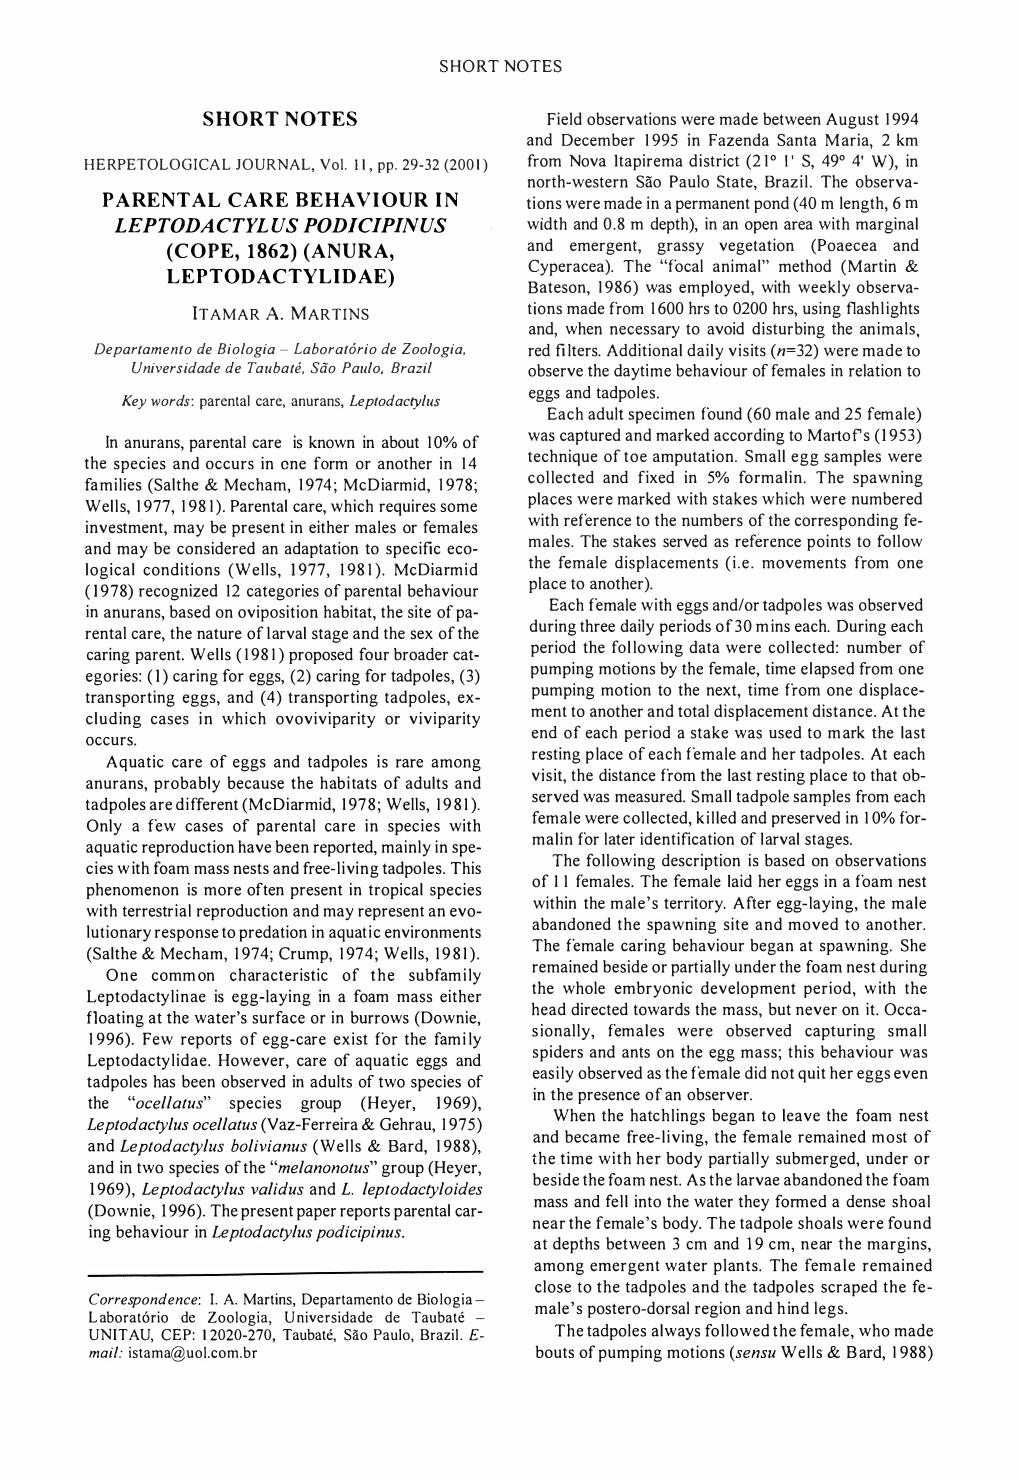 Short Notes Parental Care Behaviour in Leptodactylus